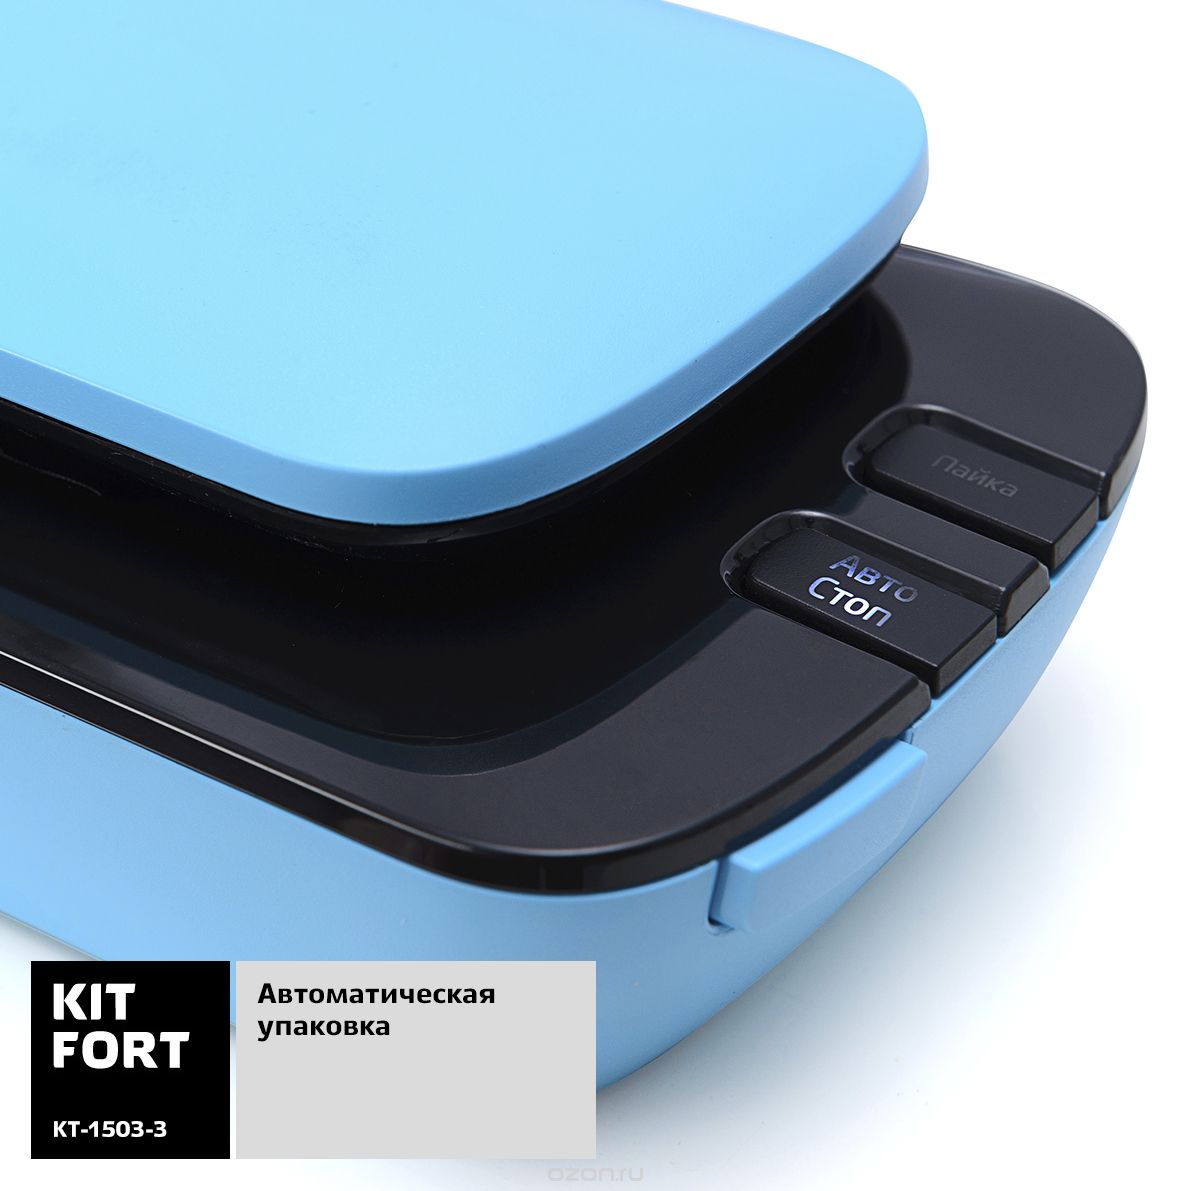   Kitfort -1503-3, Blue